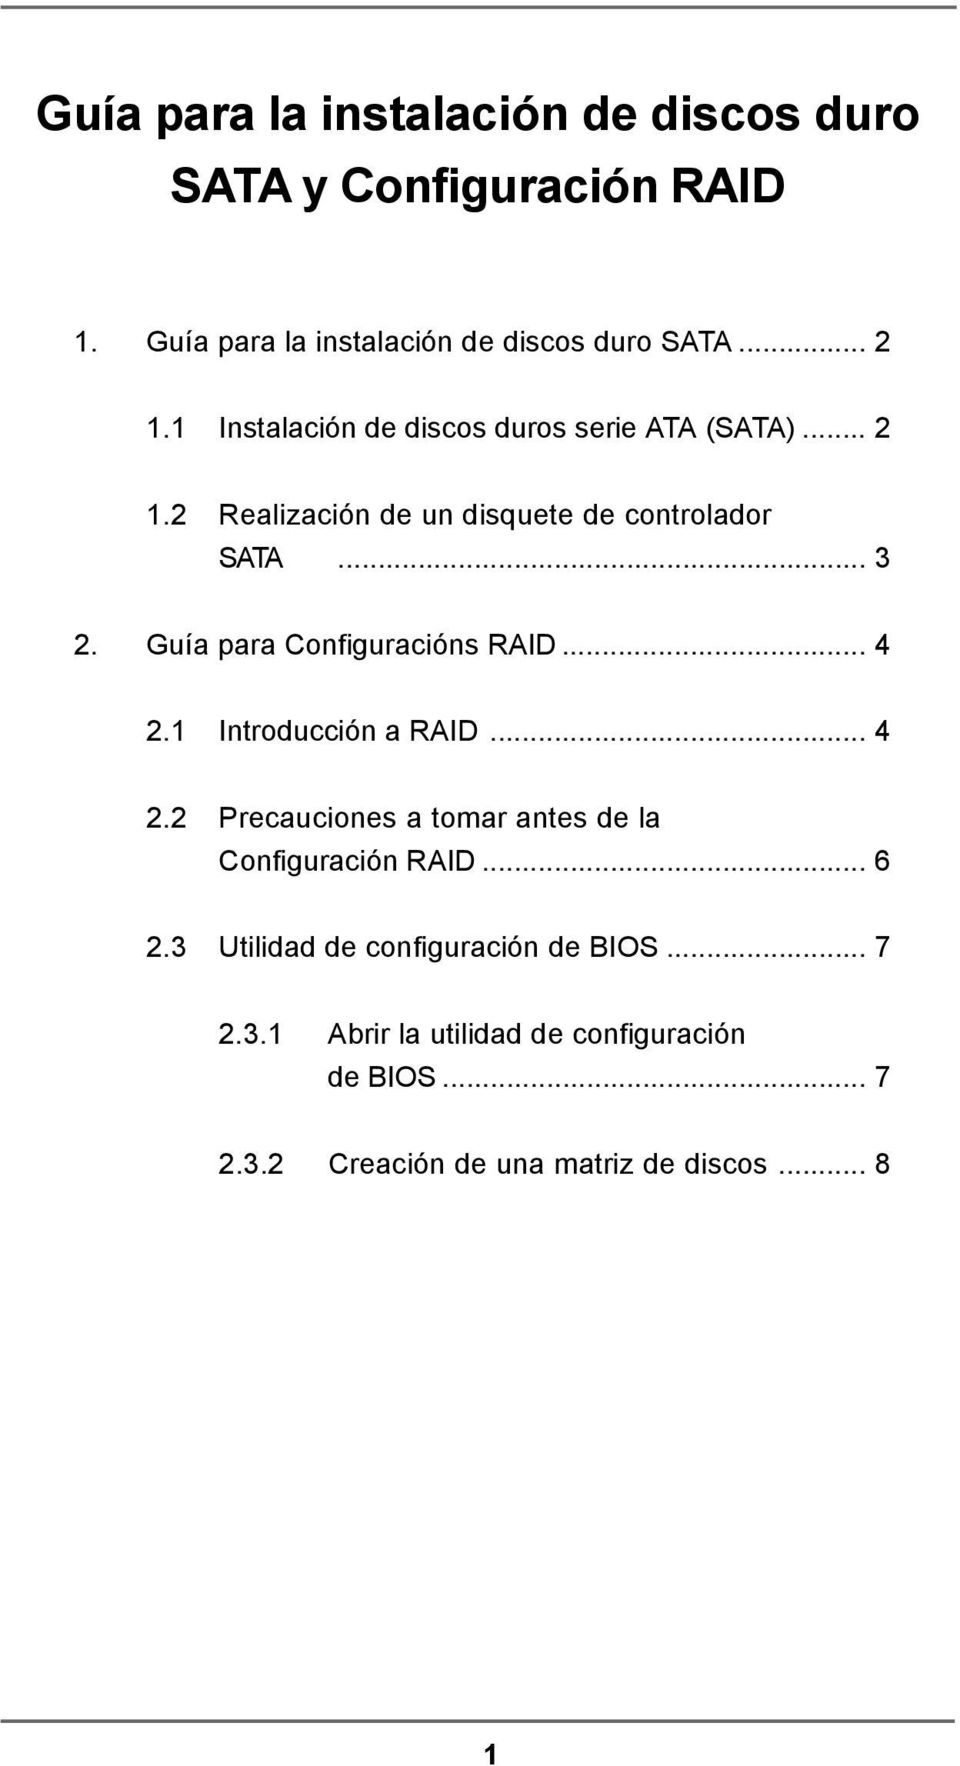 Guía para Configuracións RAID... 4 2.1 Introducción a RAID... 4 2.2 Precauciones a tomar antes de la Configuración RAID... 6 2.